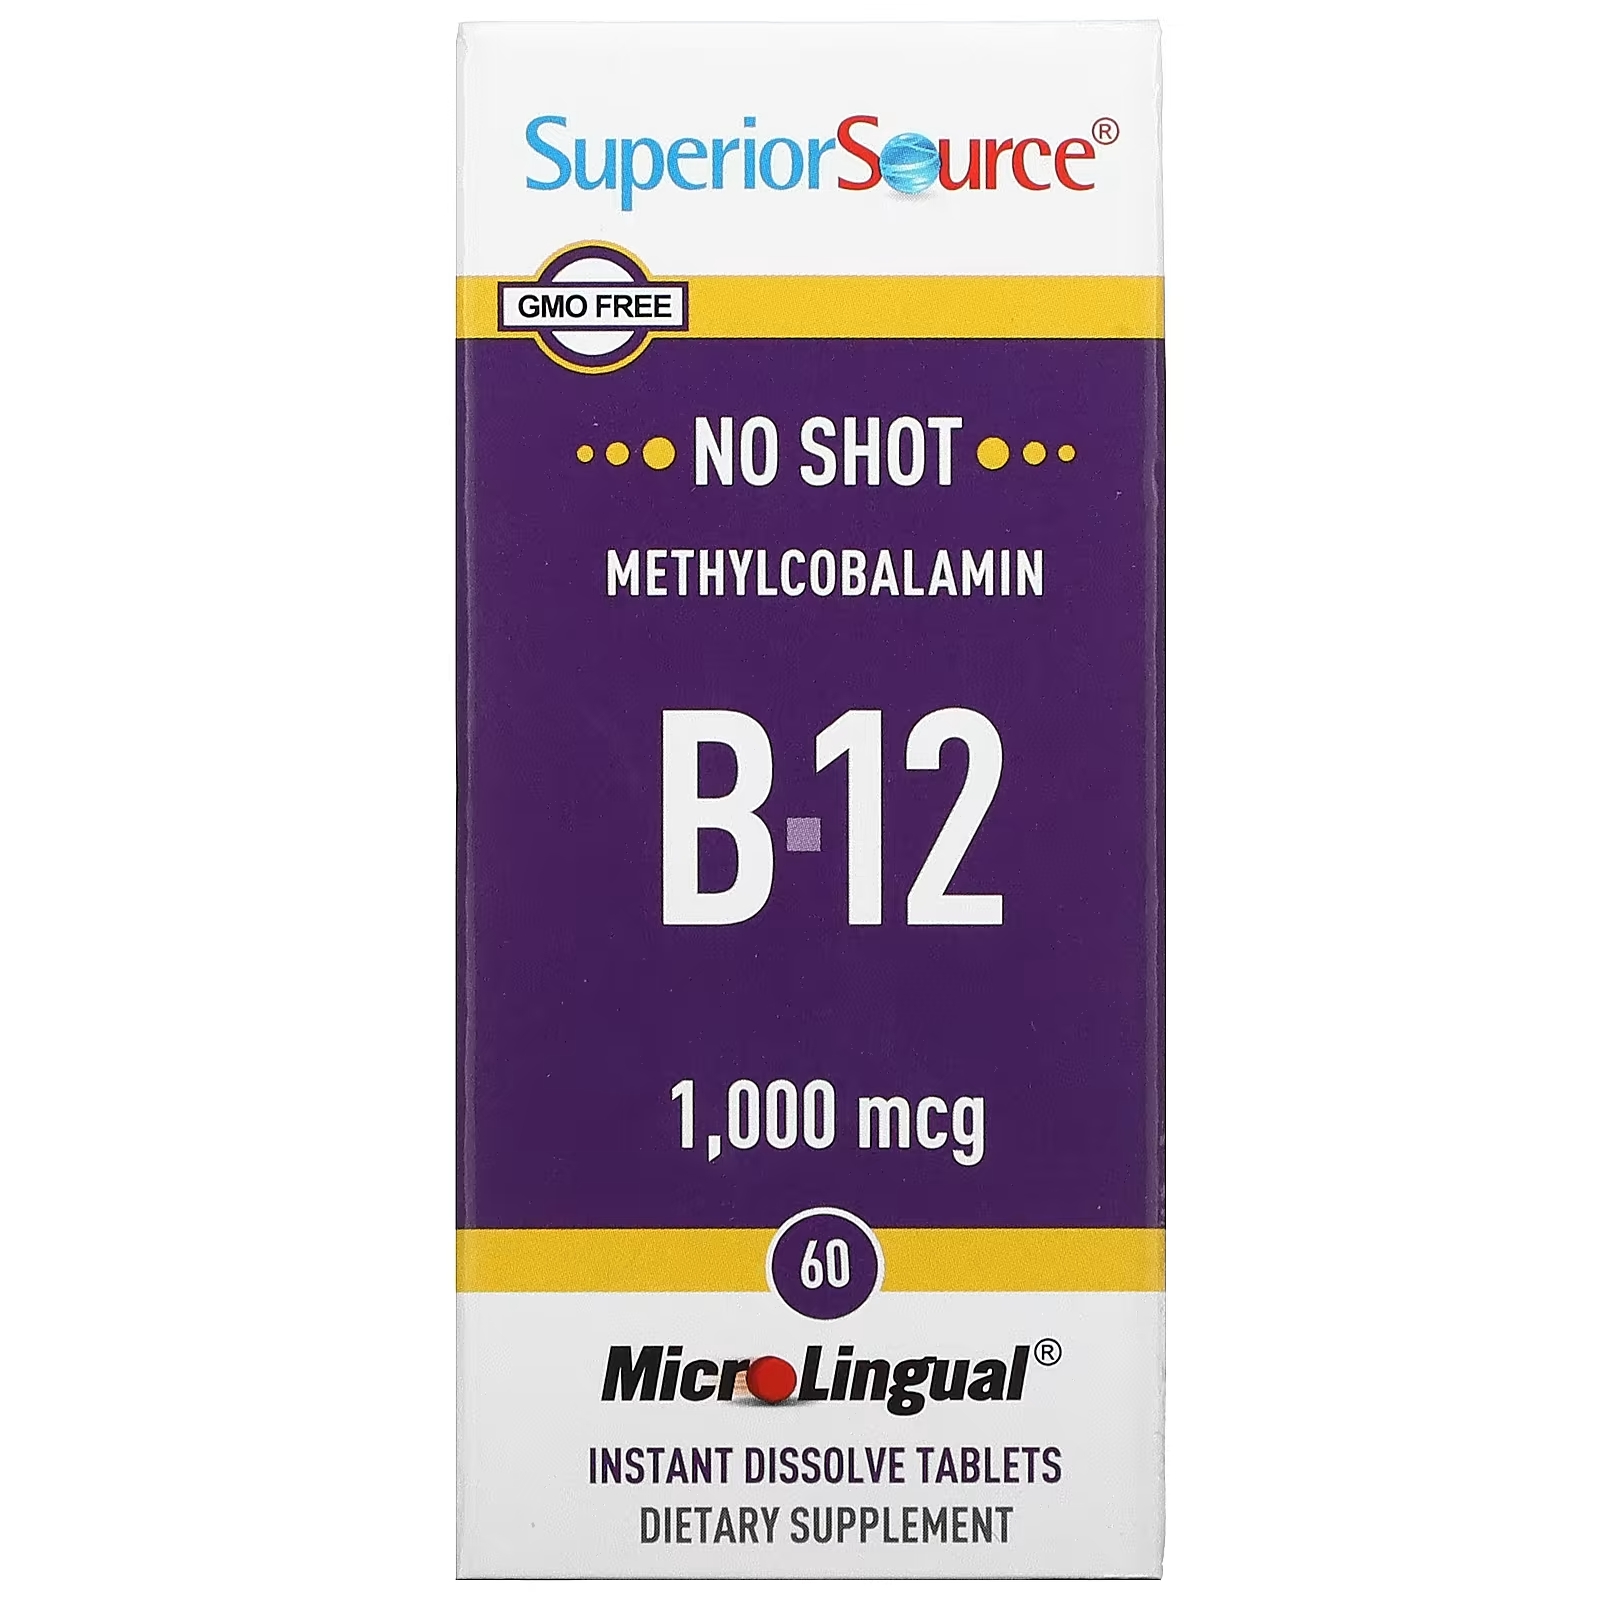 Superior Source Метилкобаламин B-12 1000 мкг, 60 быстрорастворимых таблеток superior source метилкобаламин b 12 10000 мкг 30 микролингвальных быстрорастворимых таблеток